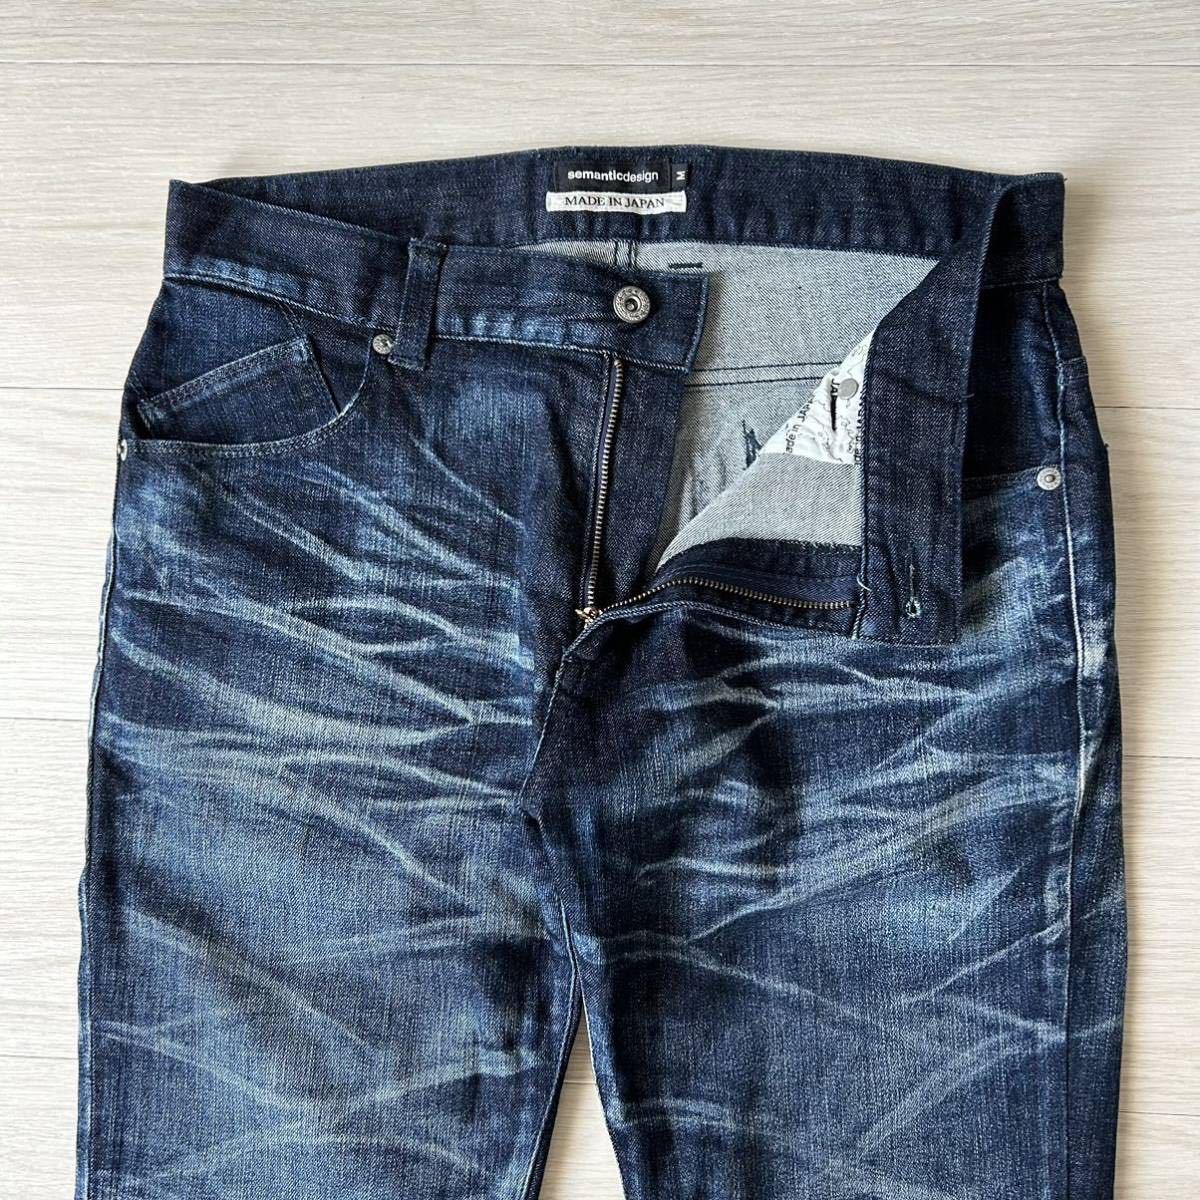 Rare 00s Japanese Label Semantic Design Weathered Denim Pants Flare Jeans Y2K archive lgb tornadomart goa ifsixwasnine kmrii_画像3